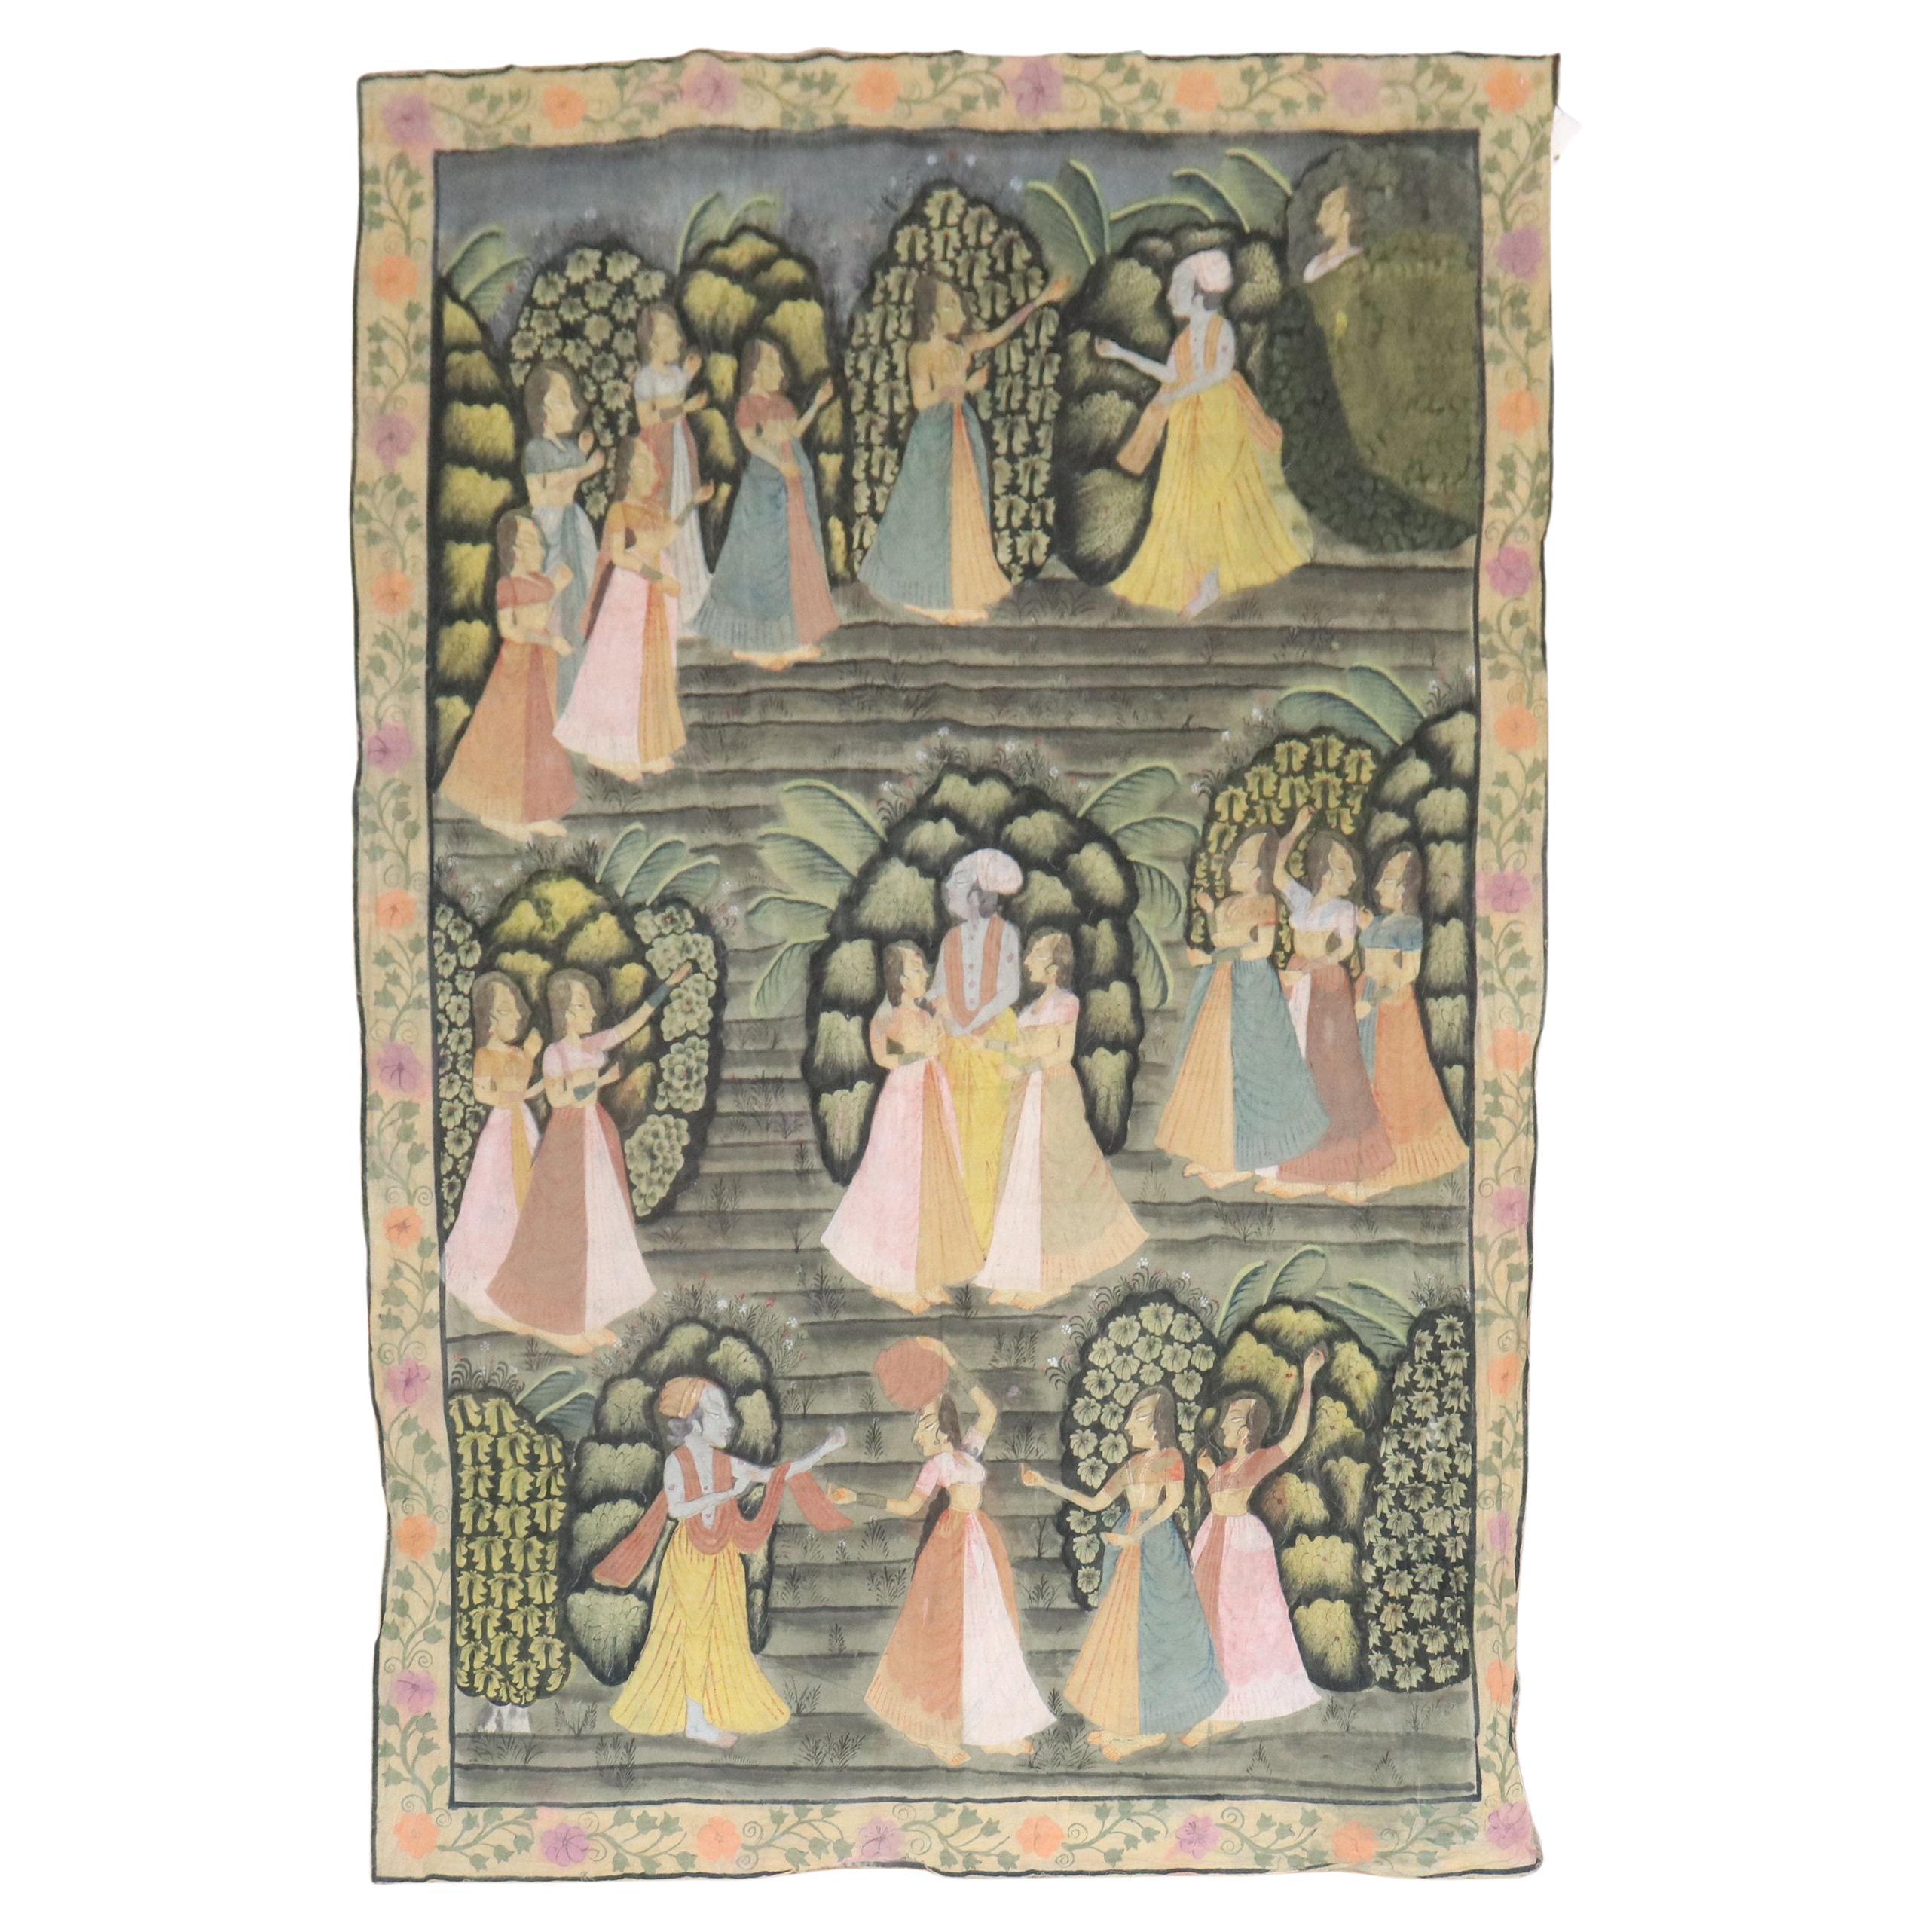 Indonesisches Batik-Textil des 19. Jahrhunderts